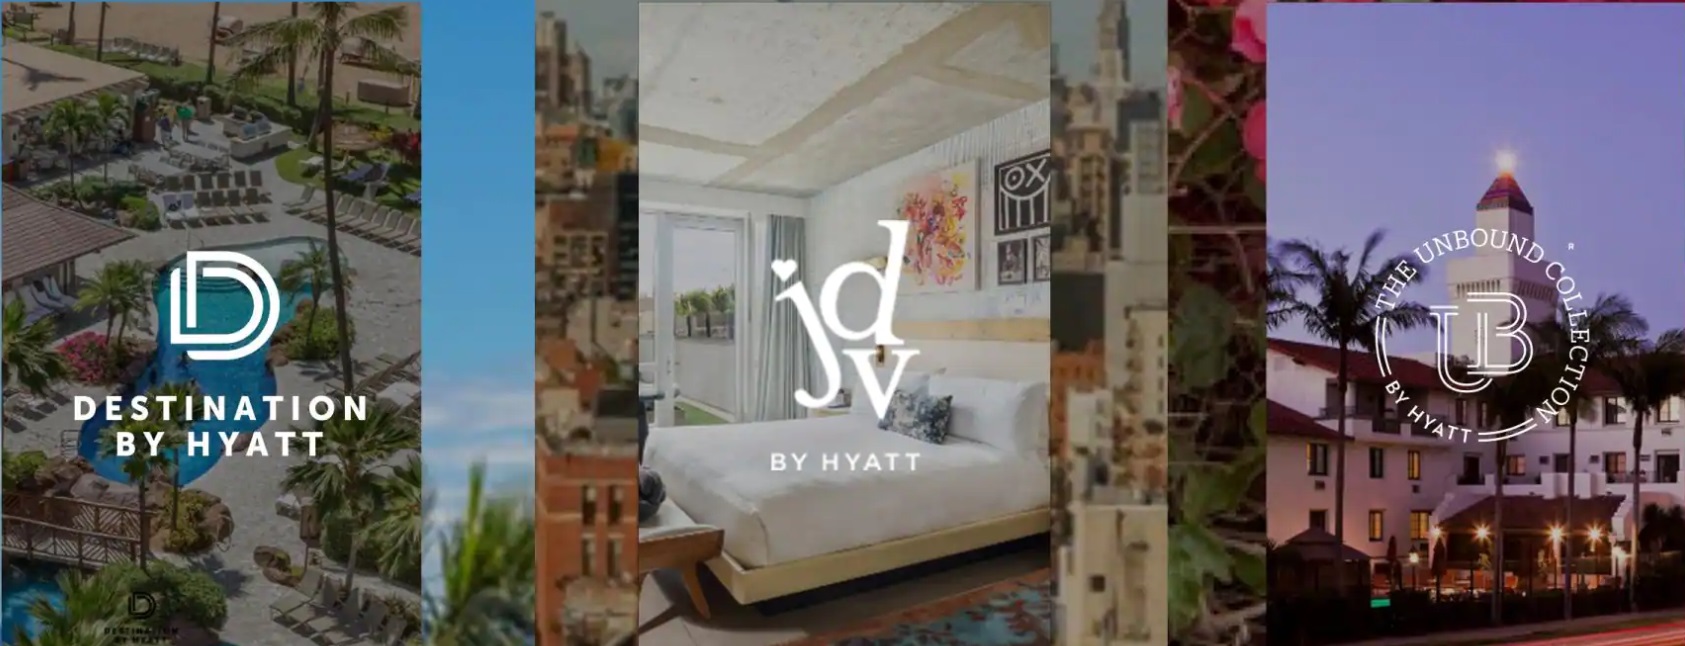 Hyatt Destination Hotels Joie de Vivre The Unbound Collection